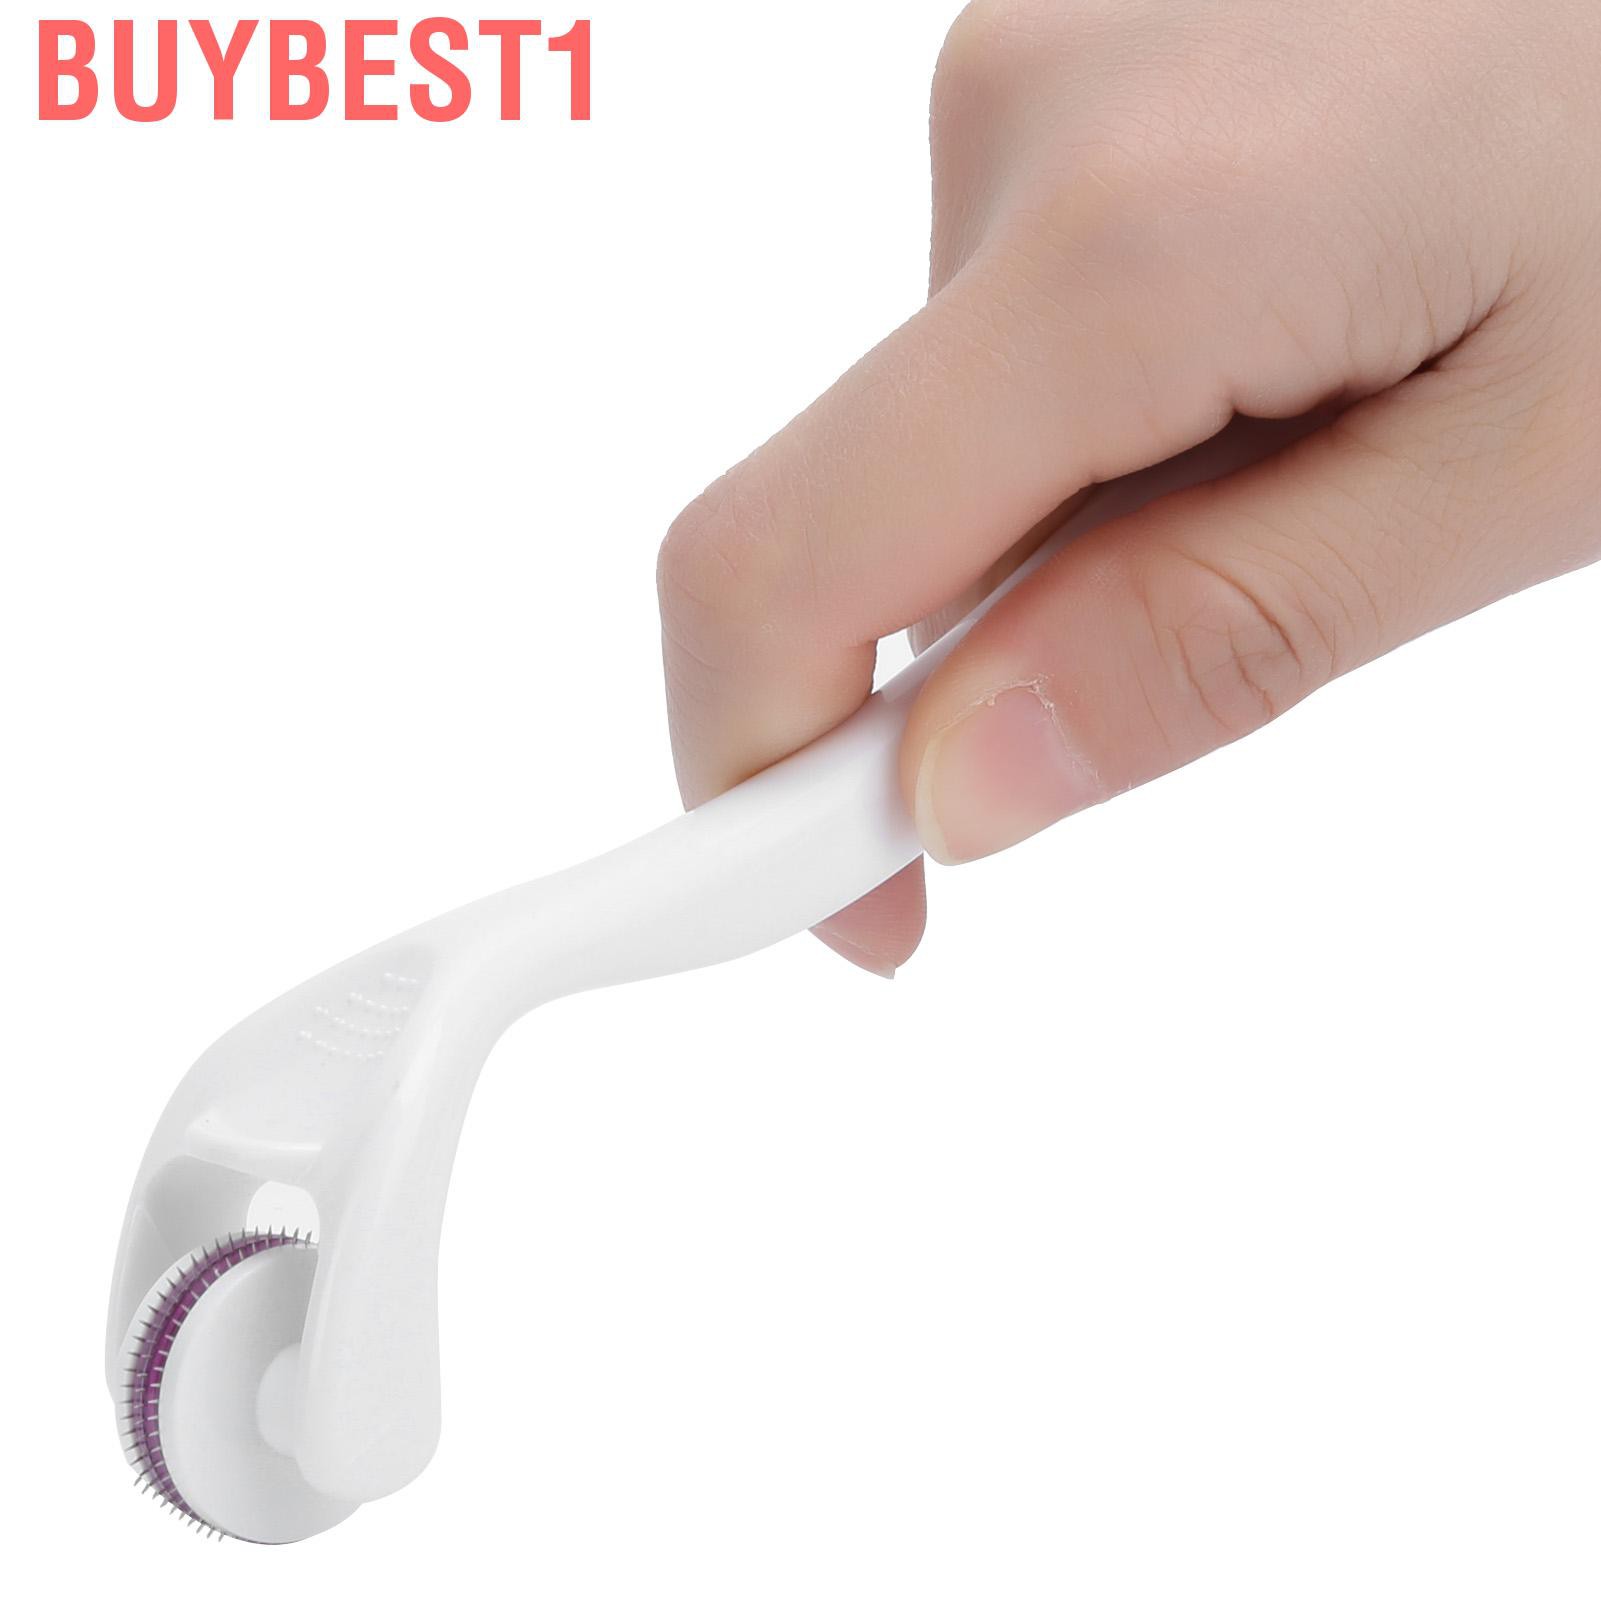 Buybest1 2pcs Micro Needle Roller Serum Lead‑In Anti‑Wrinkle Beauty Skin Cares Tool (White)